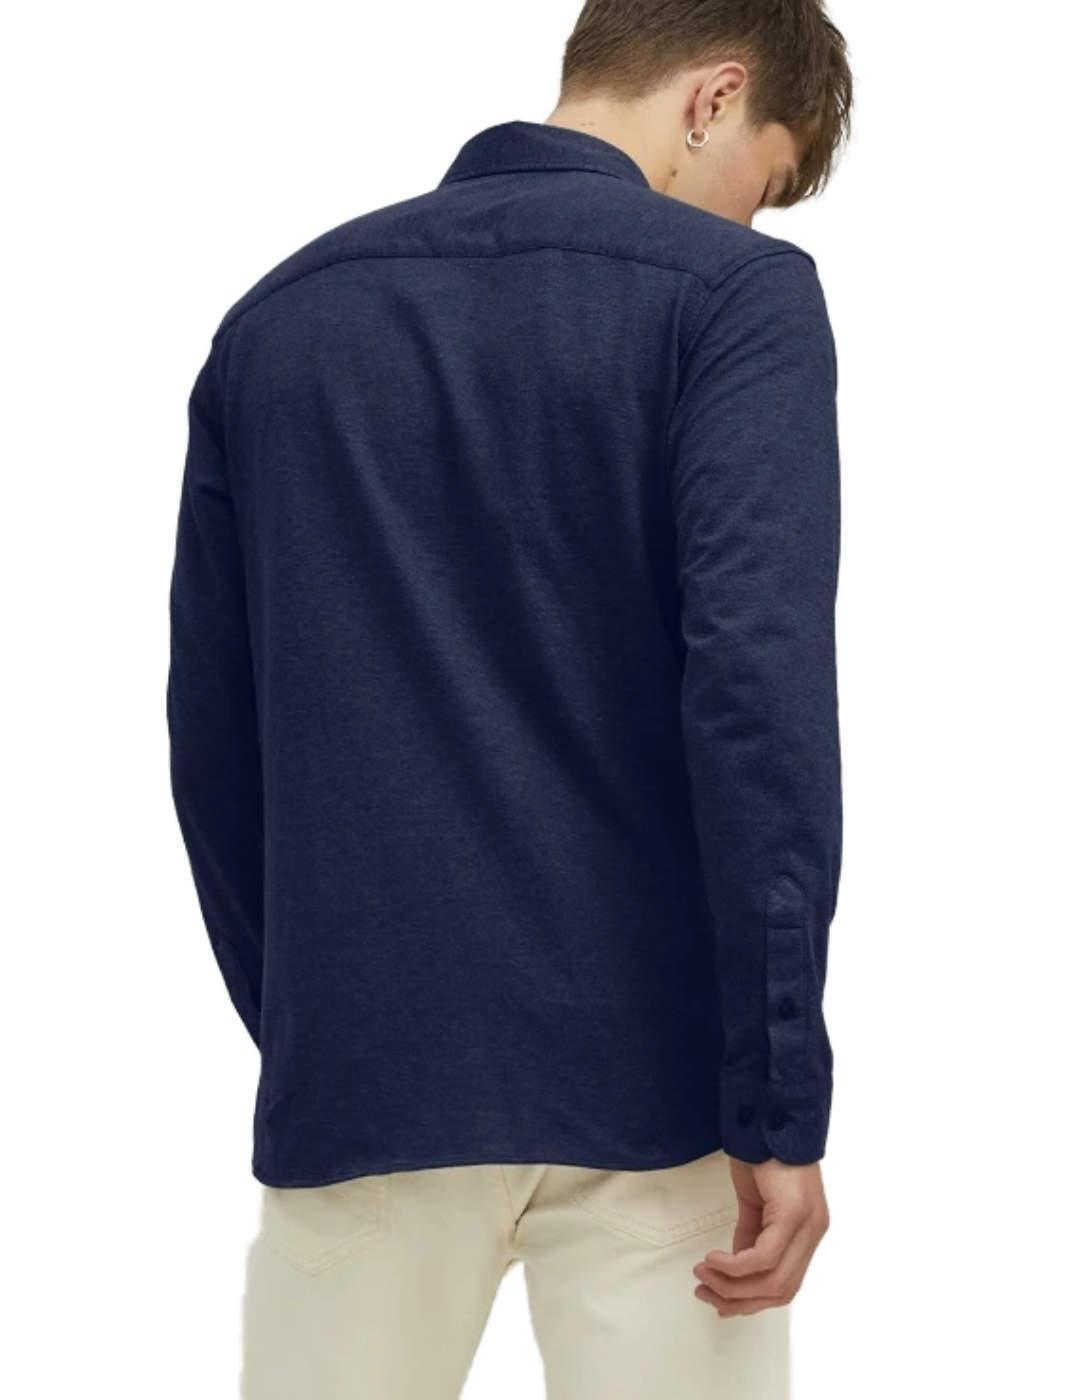 Camisa Jack&Jones Pique azul marino slim fit de hombre